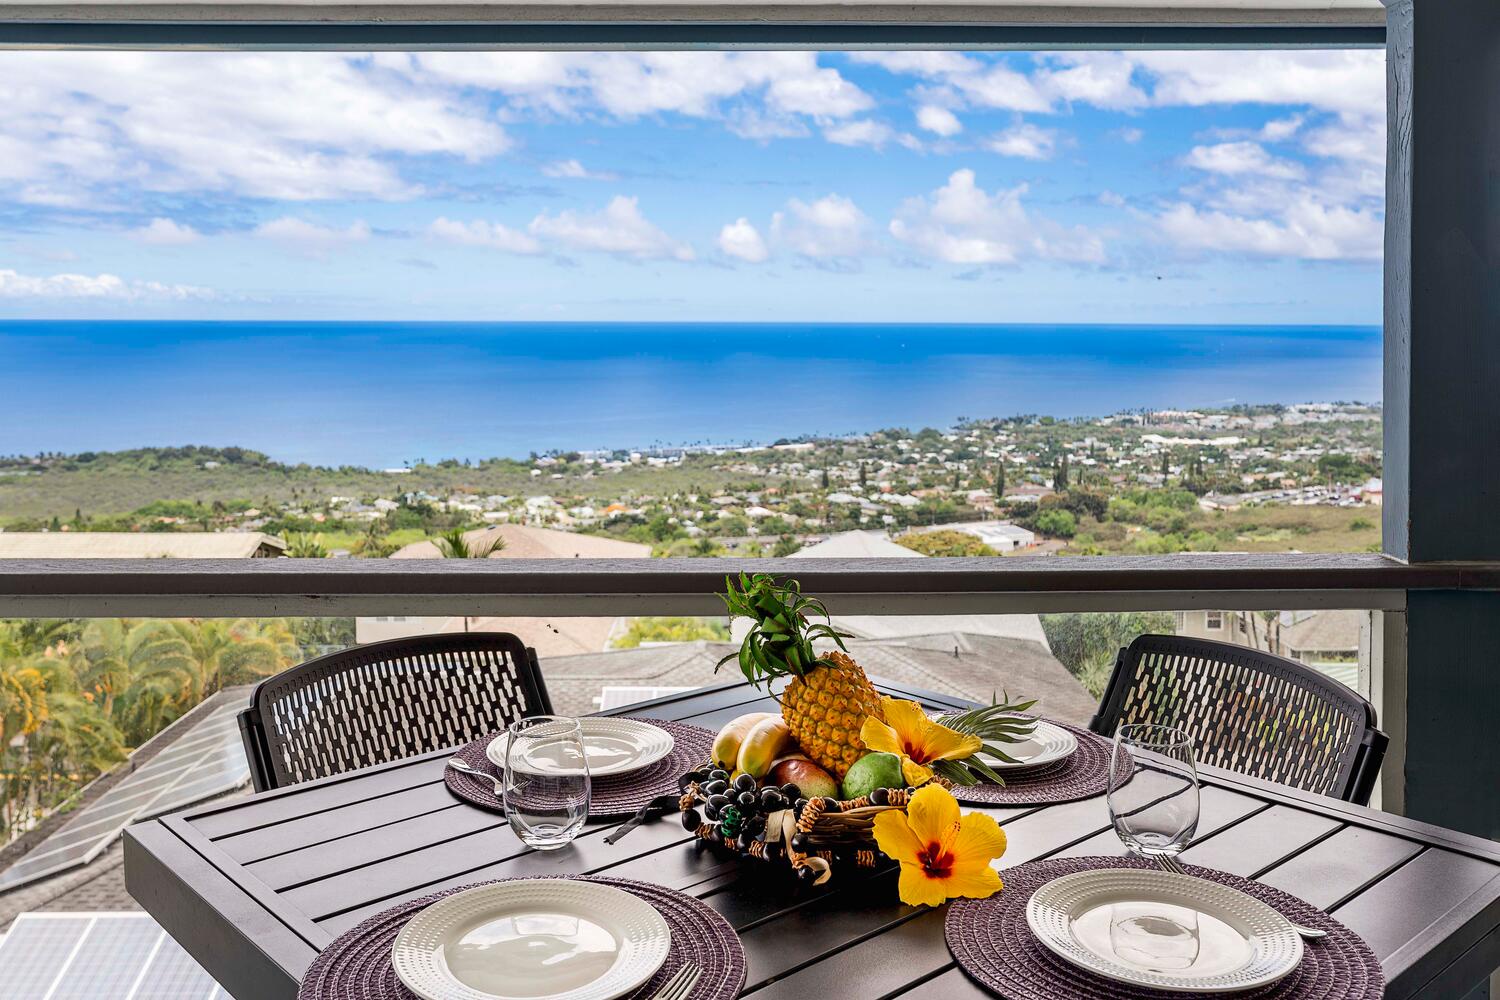 Kailua Kona Vacation Rentals, Honu O Kai (Turtle of the Sea) - Enjoy your meals from the upstair lanai with panoramic ocean views!